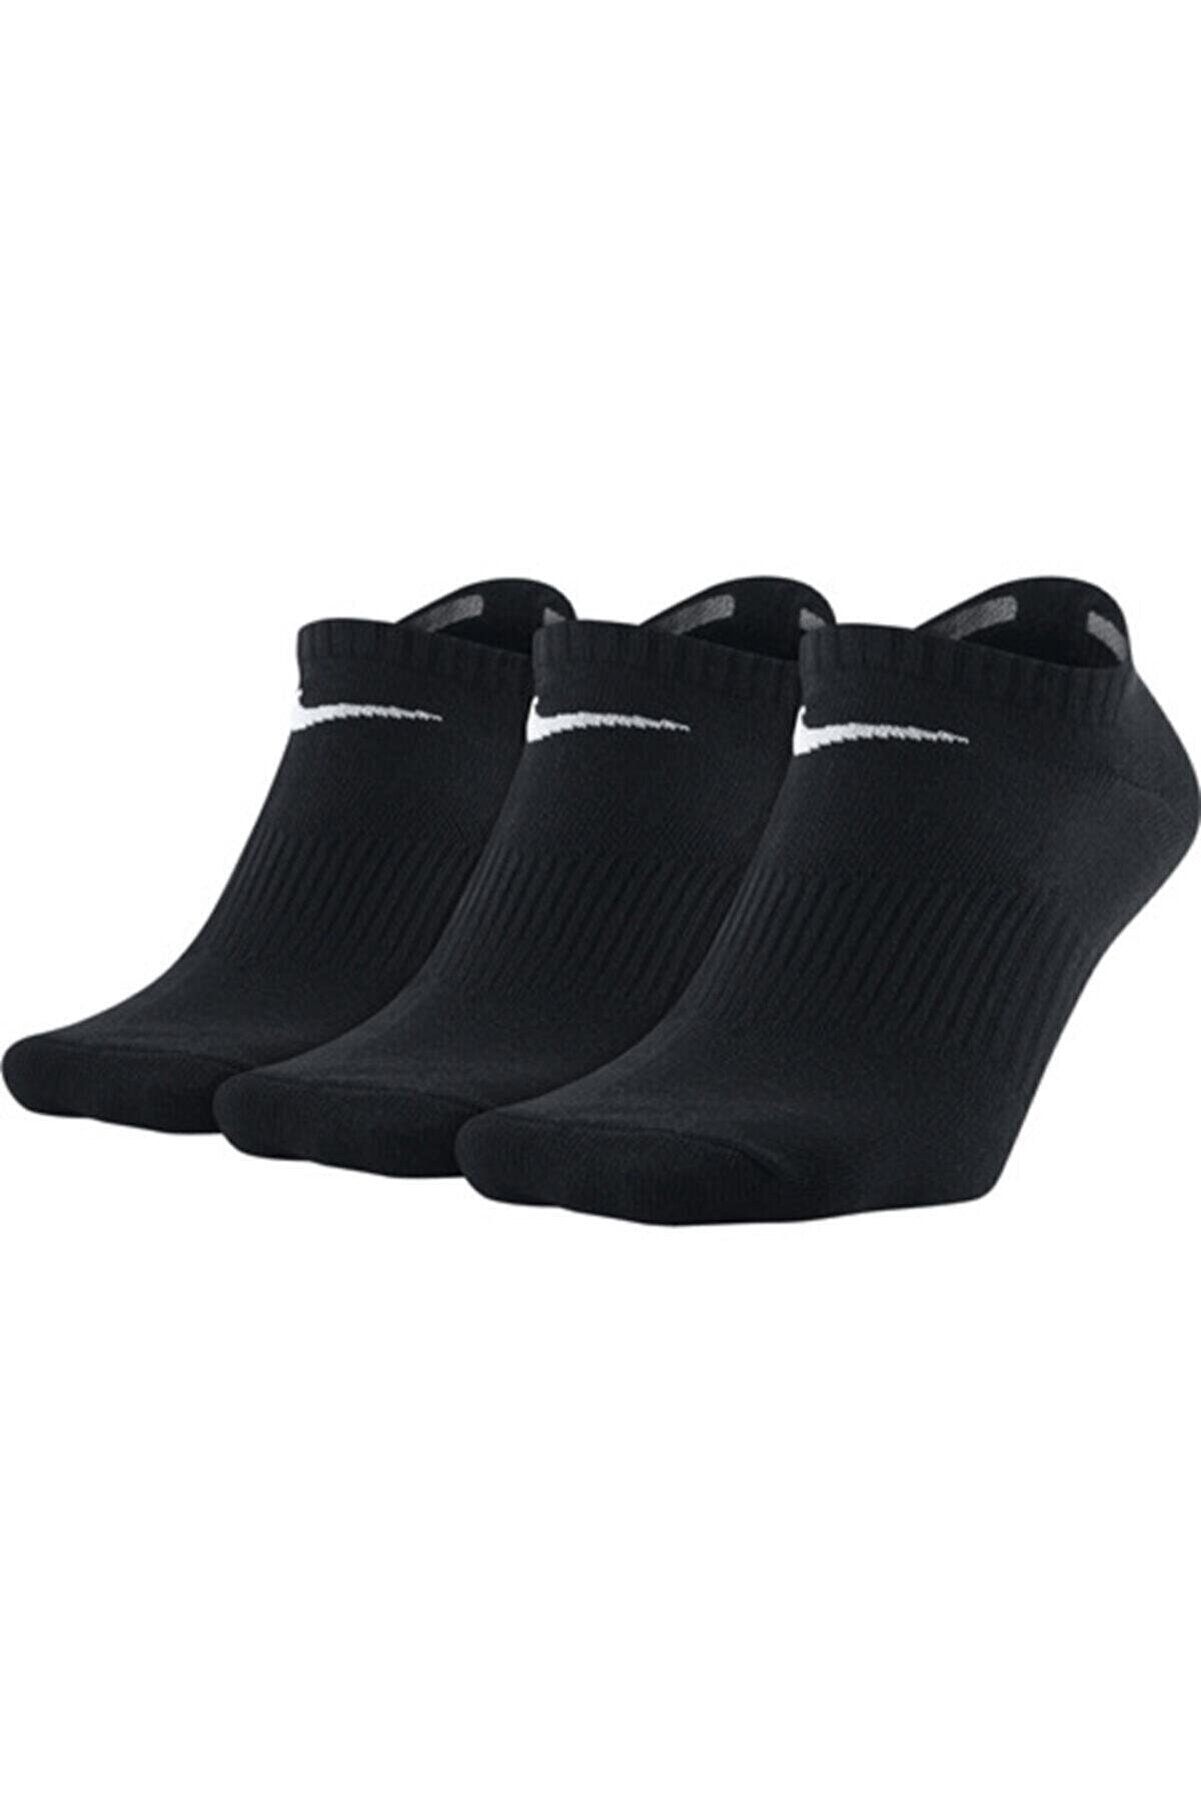 Nike Unisex Siyah Perf Lıghtweıght 3'lü Çorap Sx4705-001